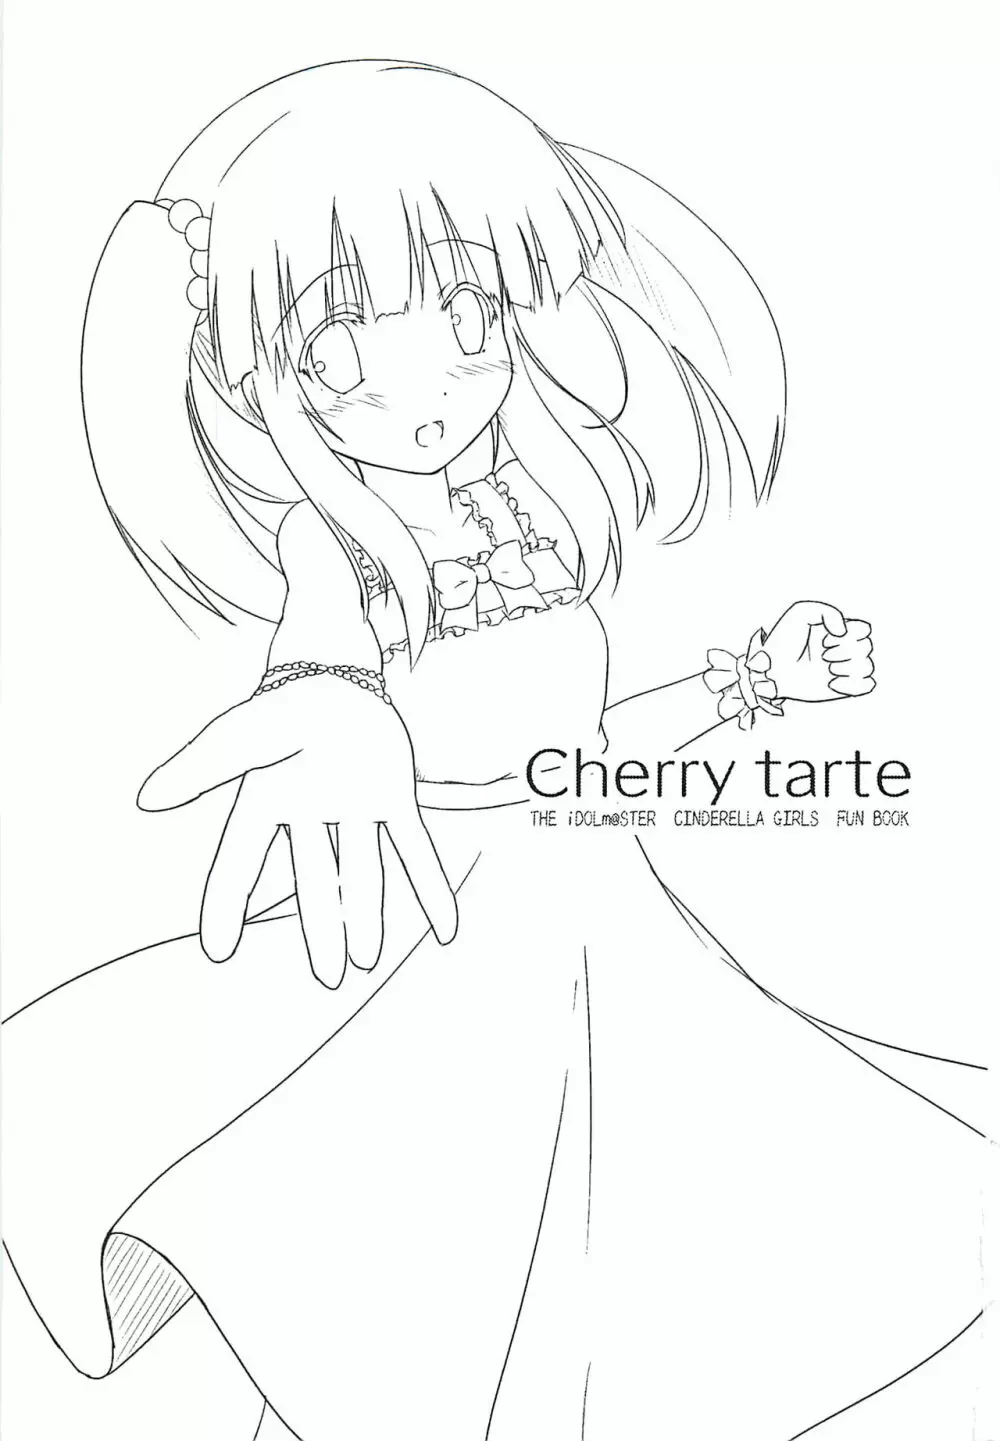 Cherry tarte - page2